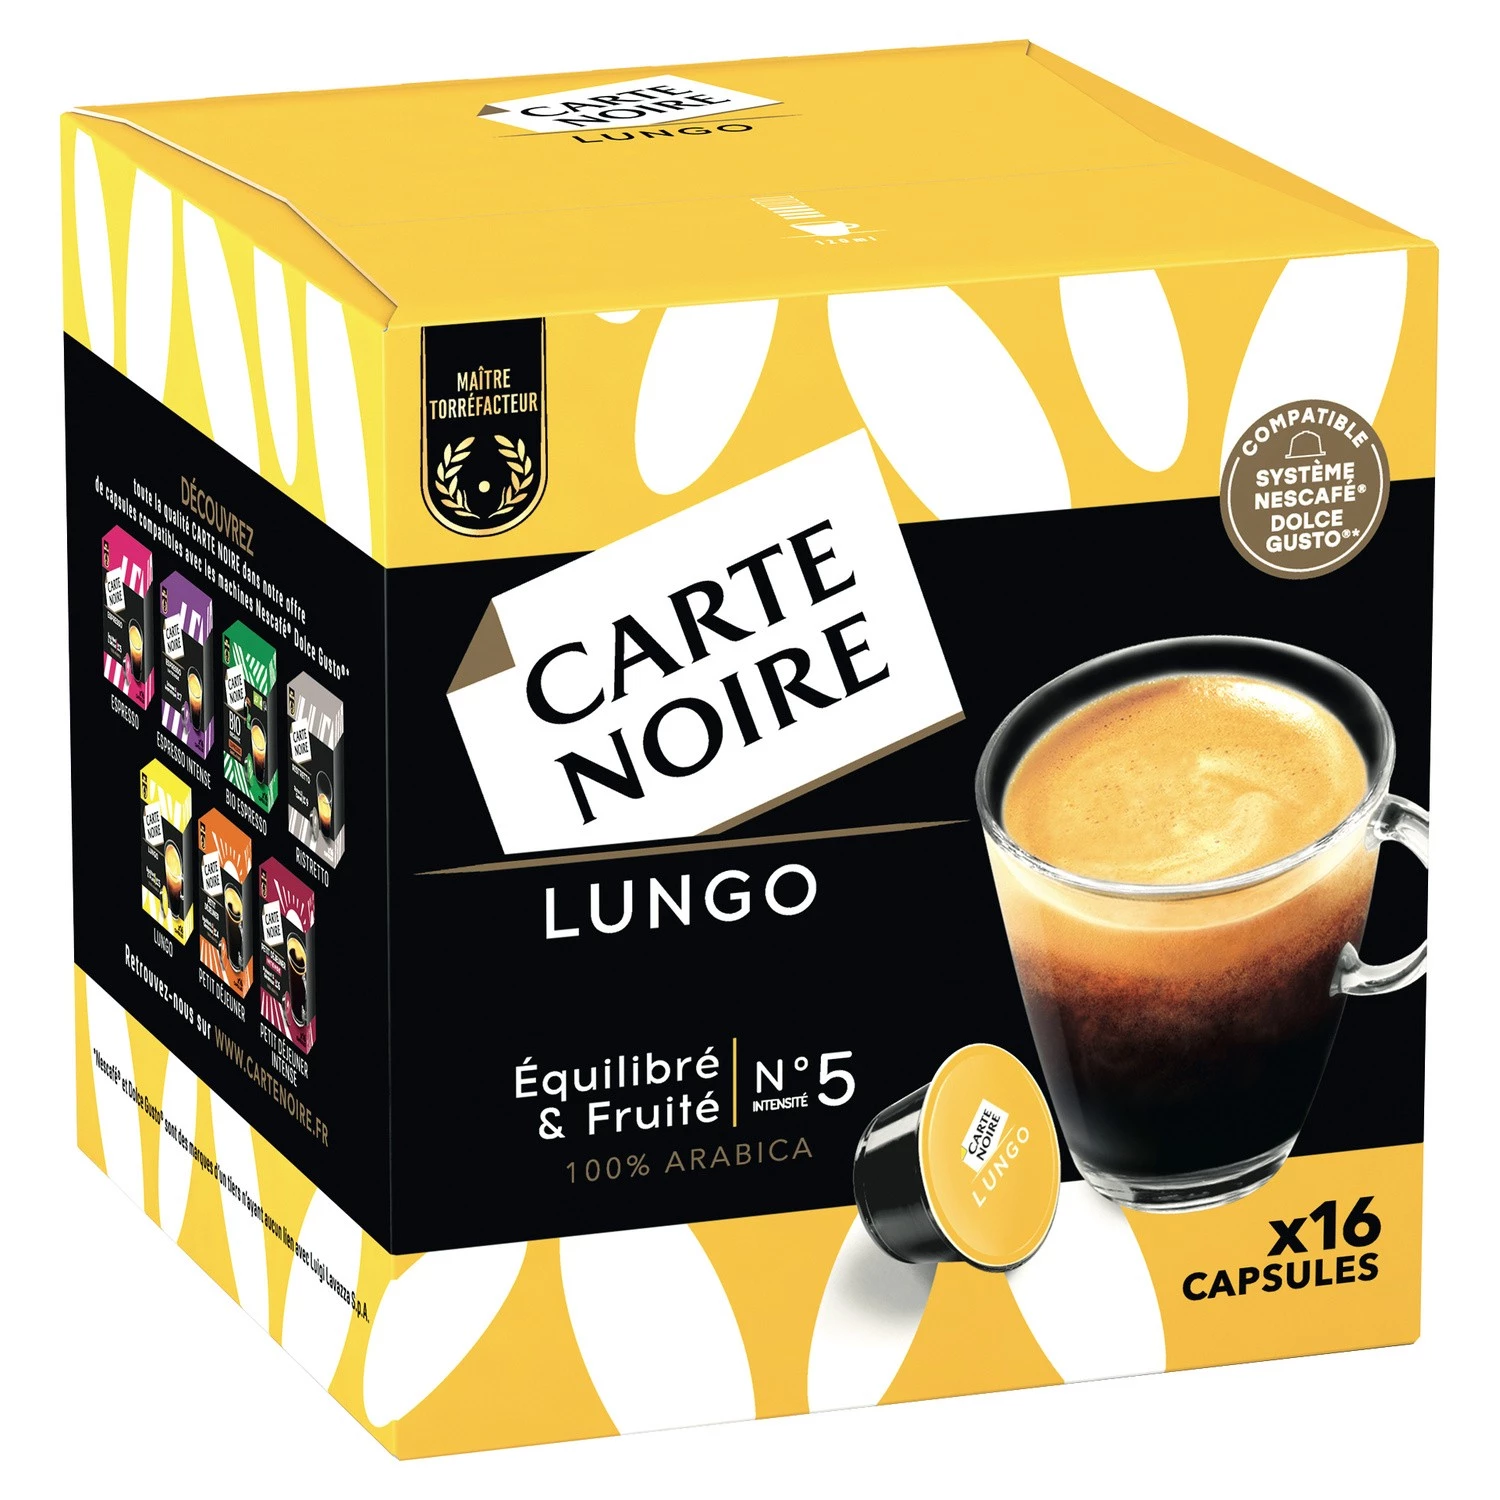 Cápsulas de café lungo n°5 x16 cápsulas 128g - CARTE NOIRE